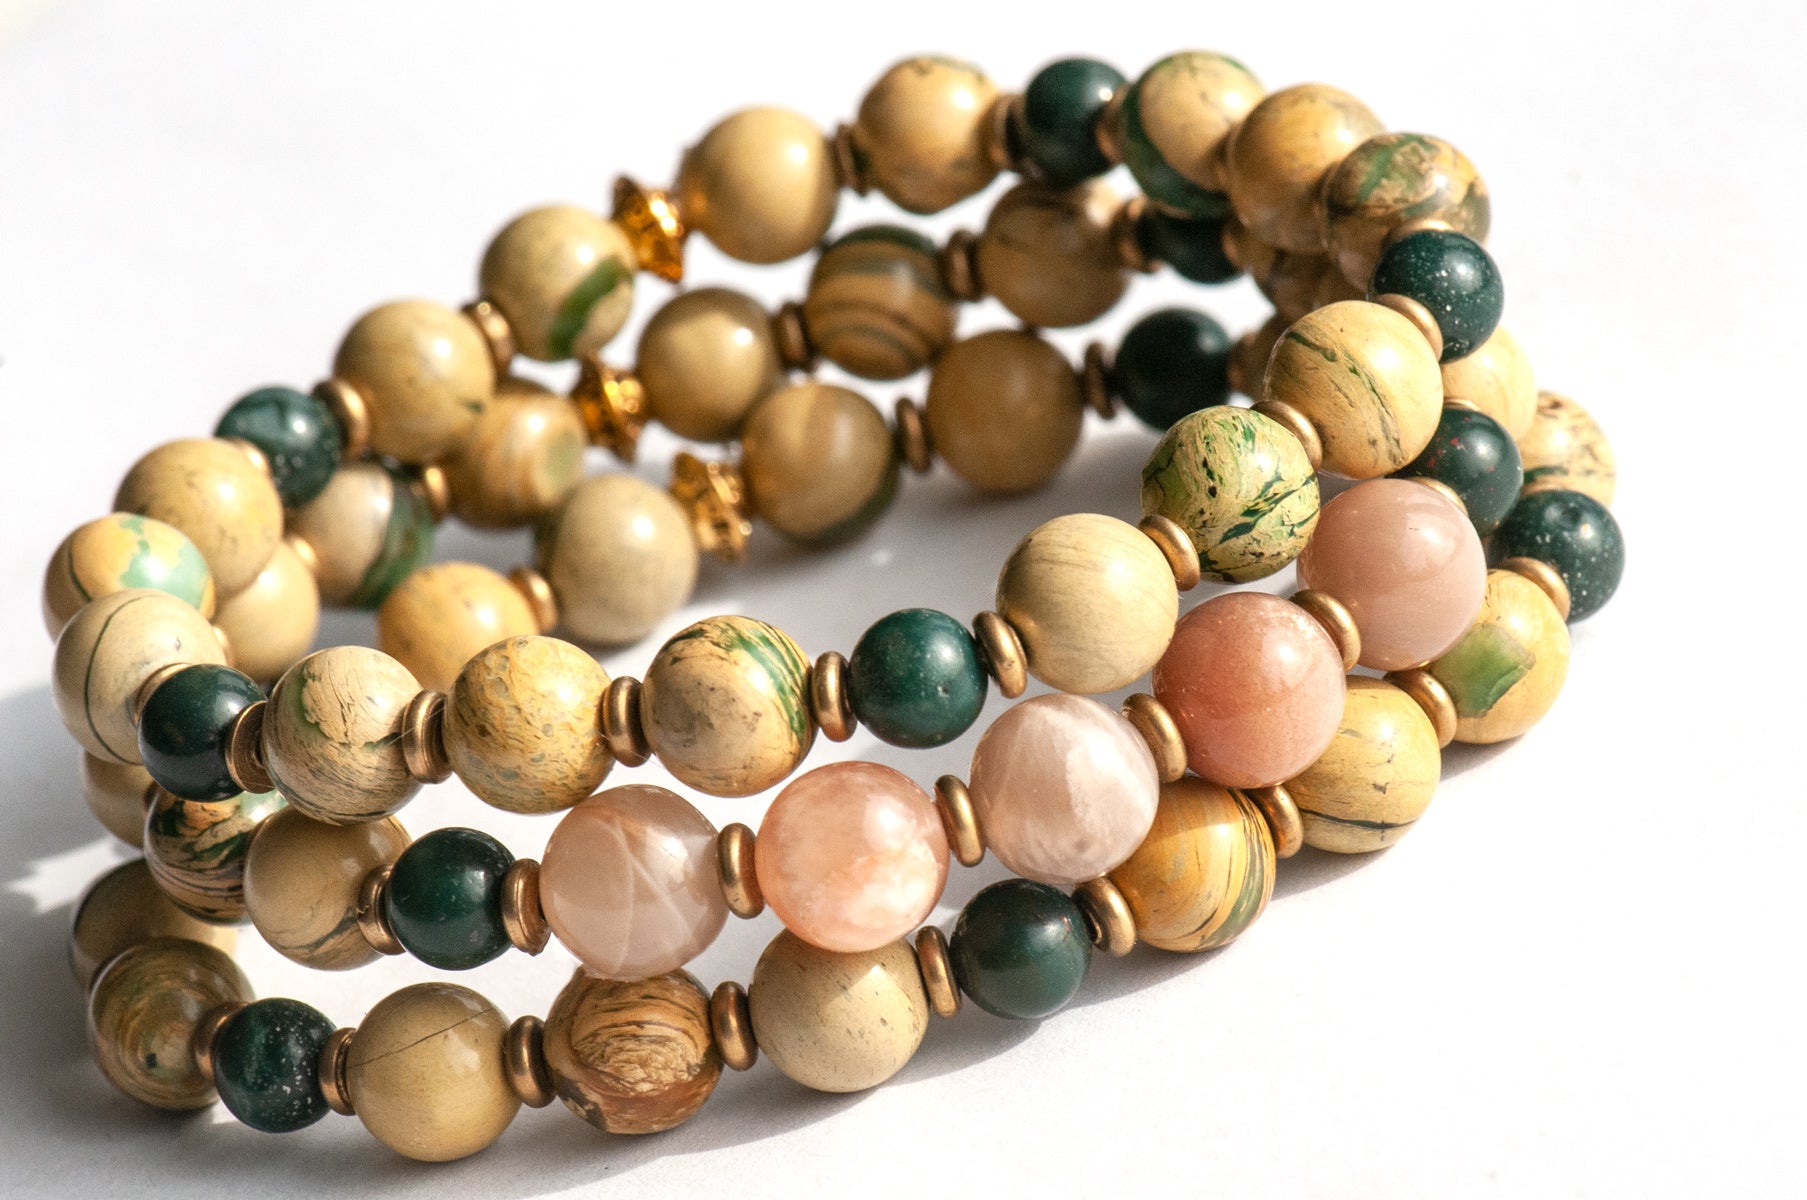 Harvest Moon bracelet set featuring Terra Agate, bloodstone. and peach Moonstone, handmade in New Brunswick Canada